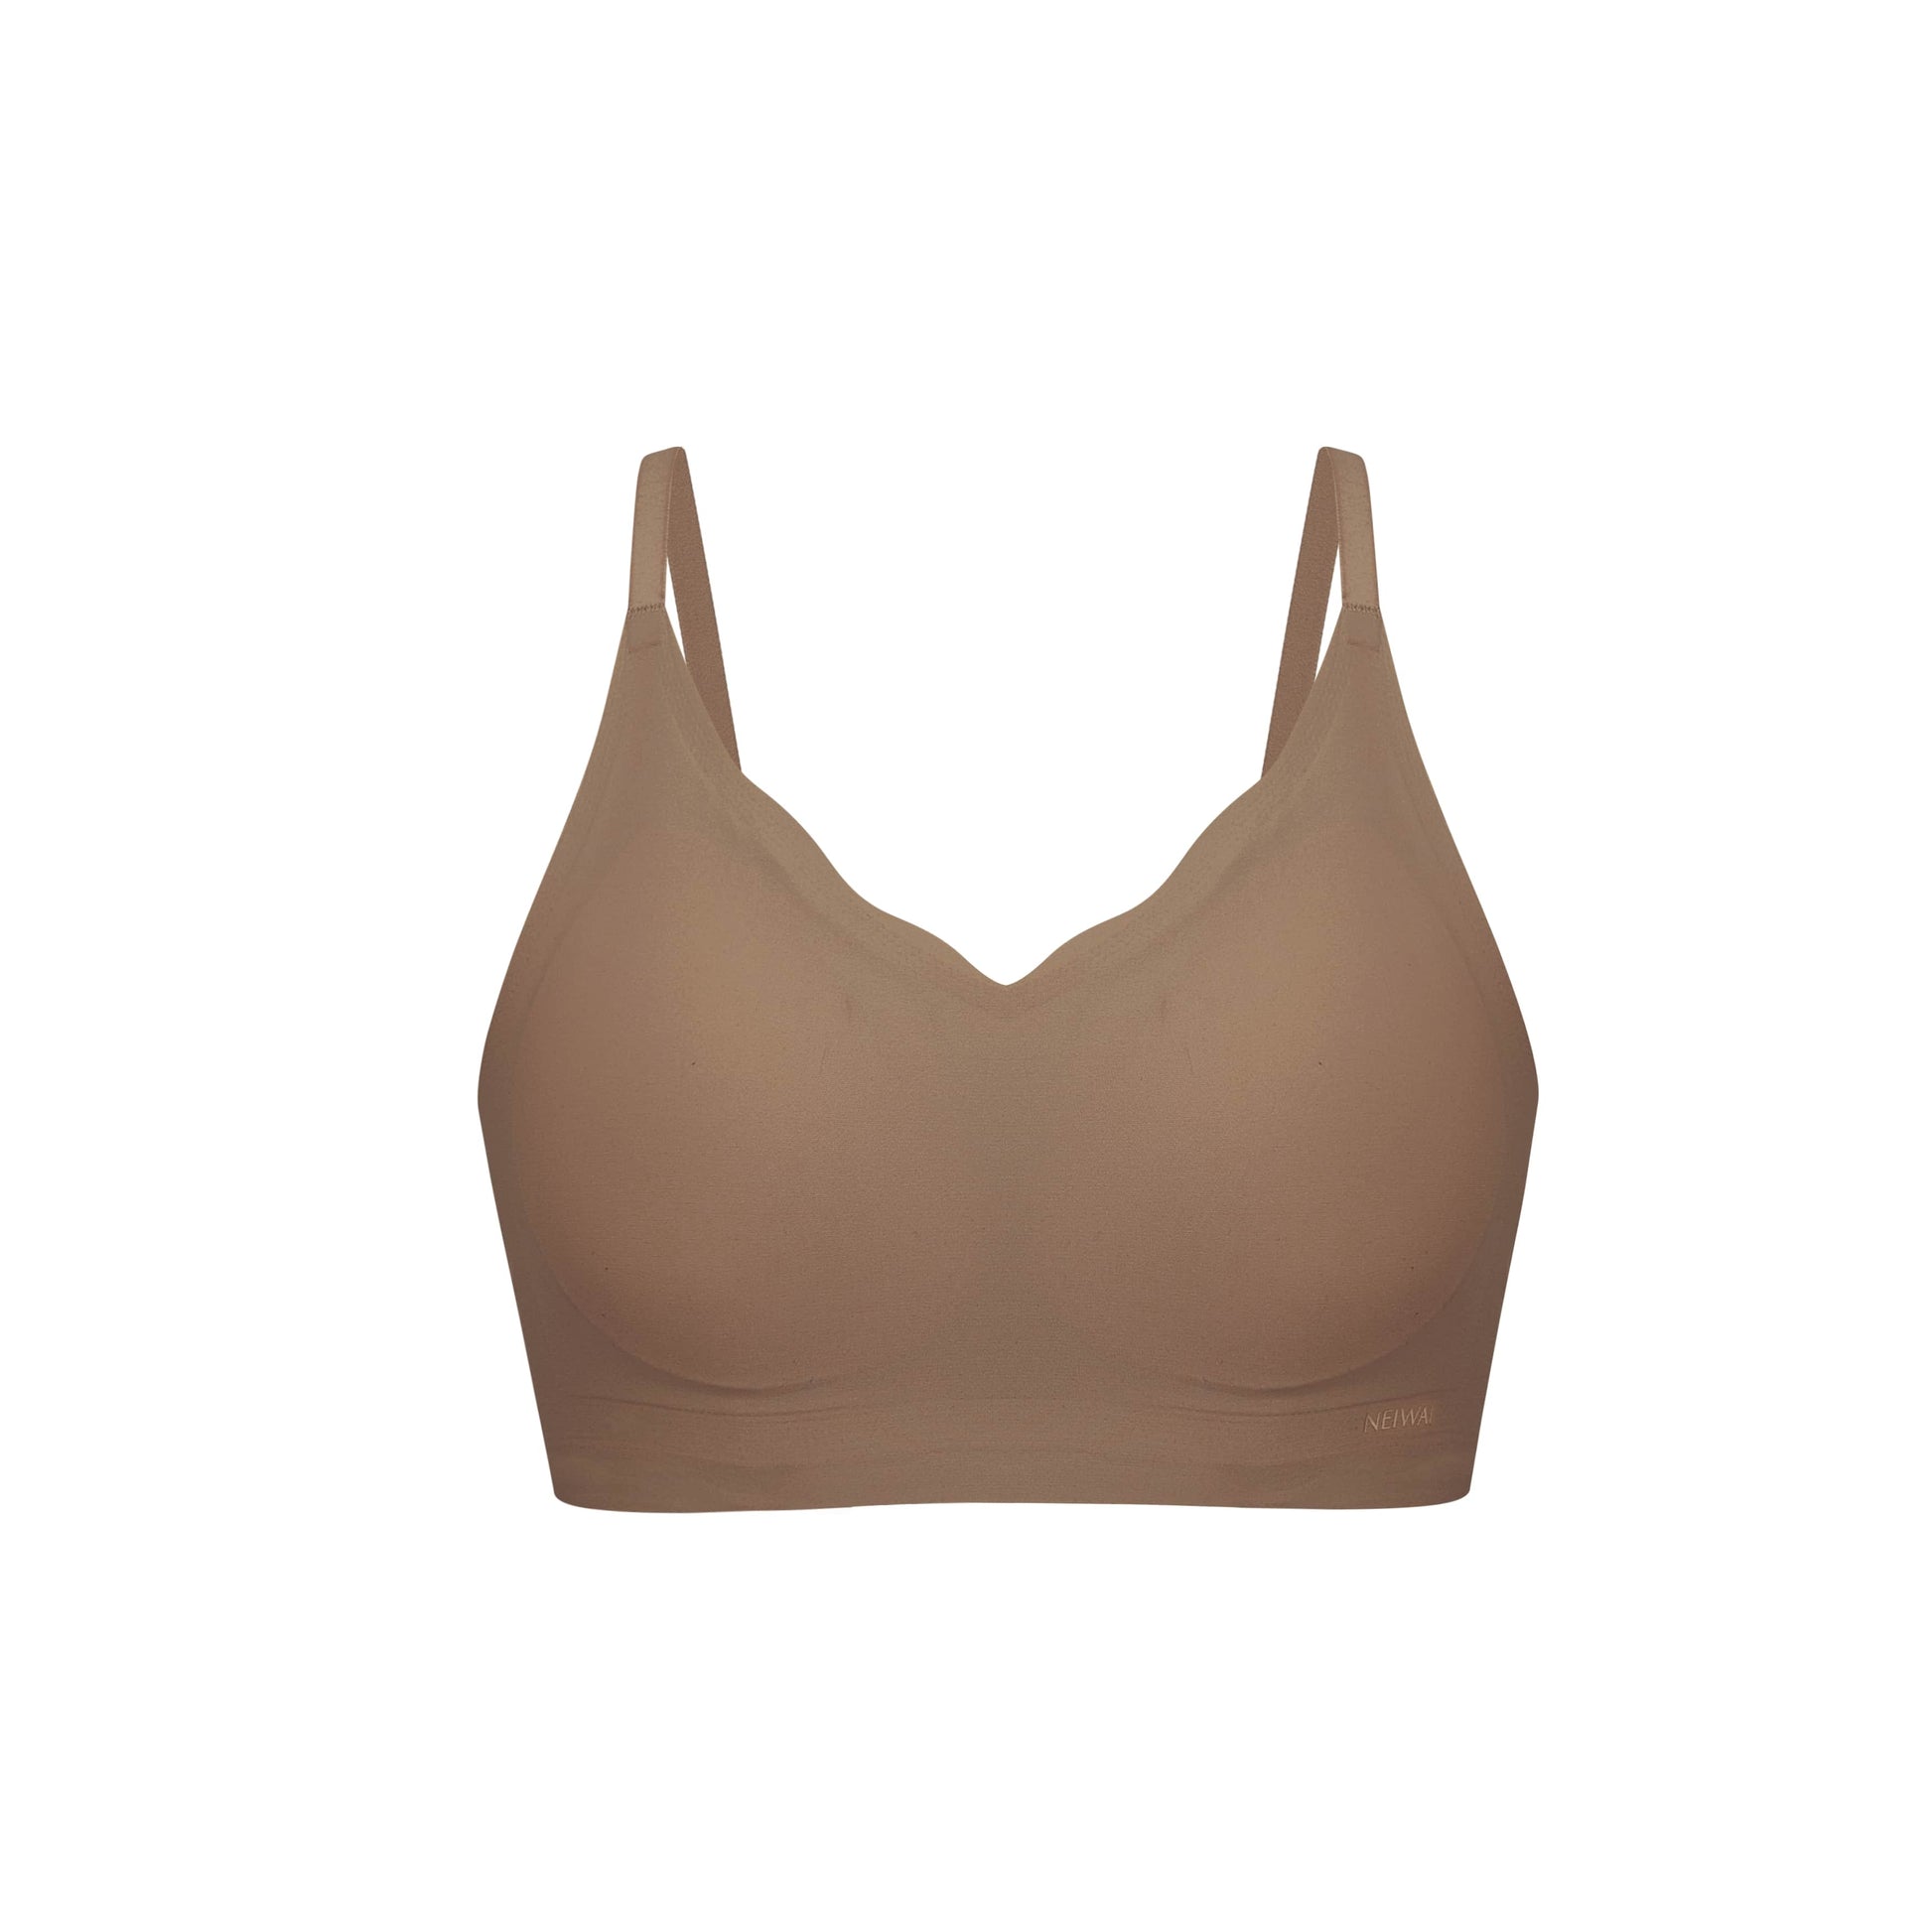 Flat lay image of light brown bra